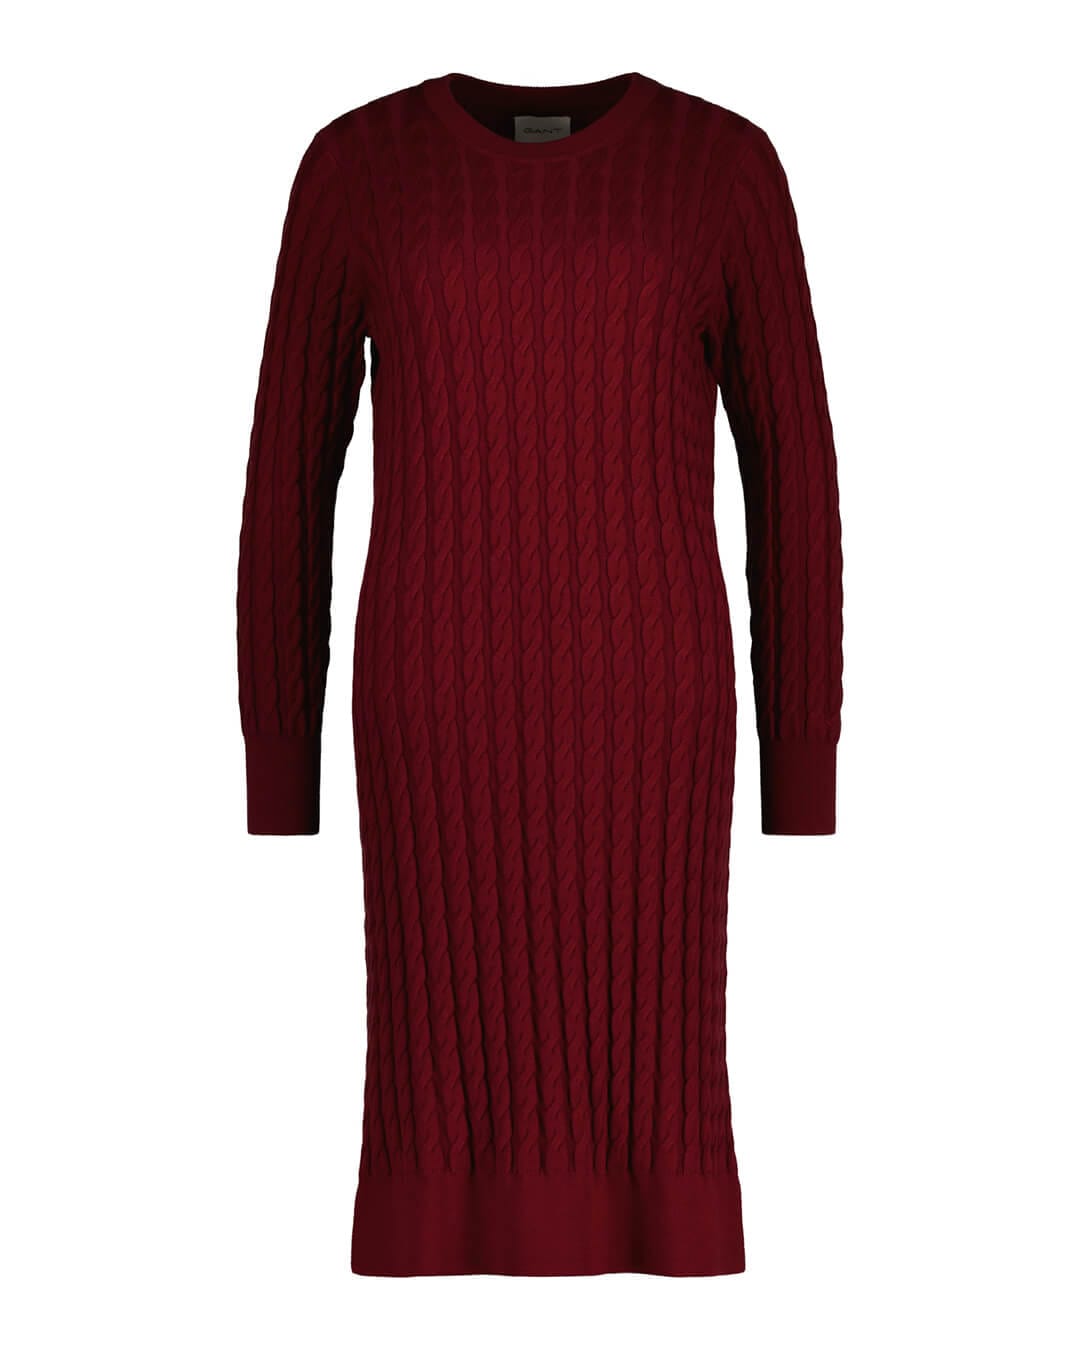 Gant Dresses Gant Plumped Red Stretch Cotton Cable Knit Crew Neck Dress